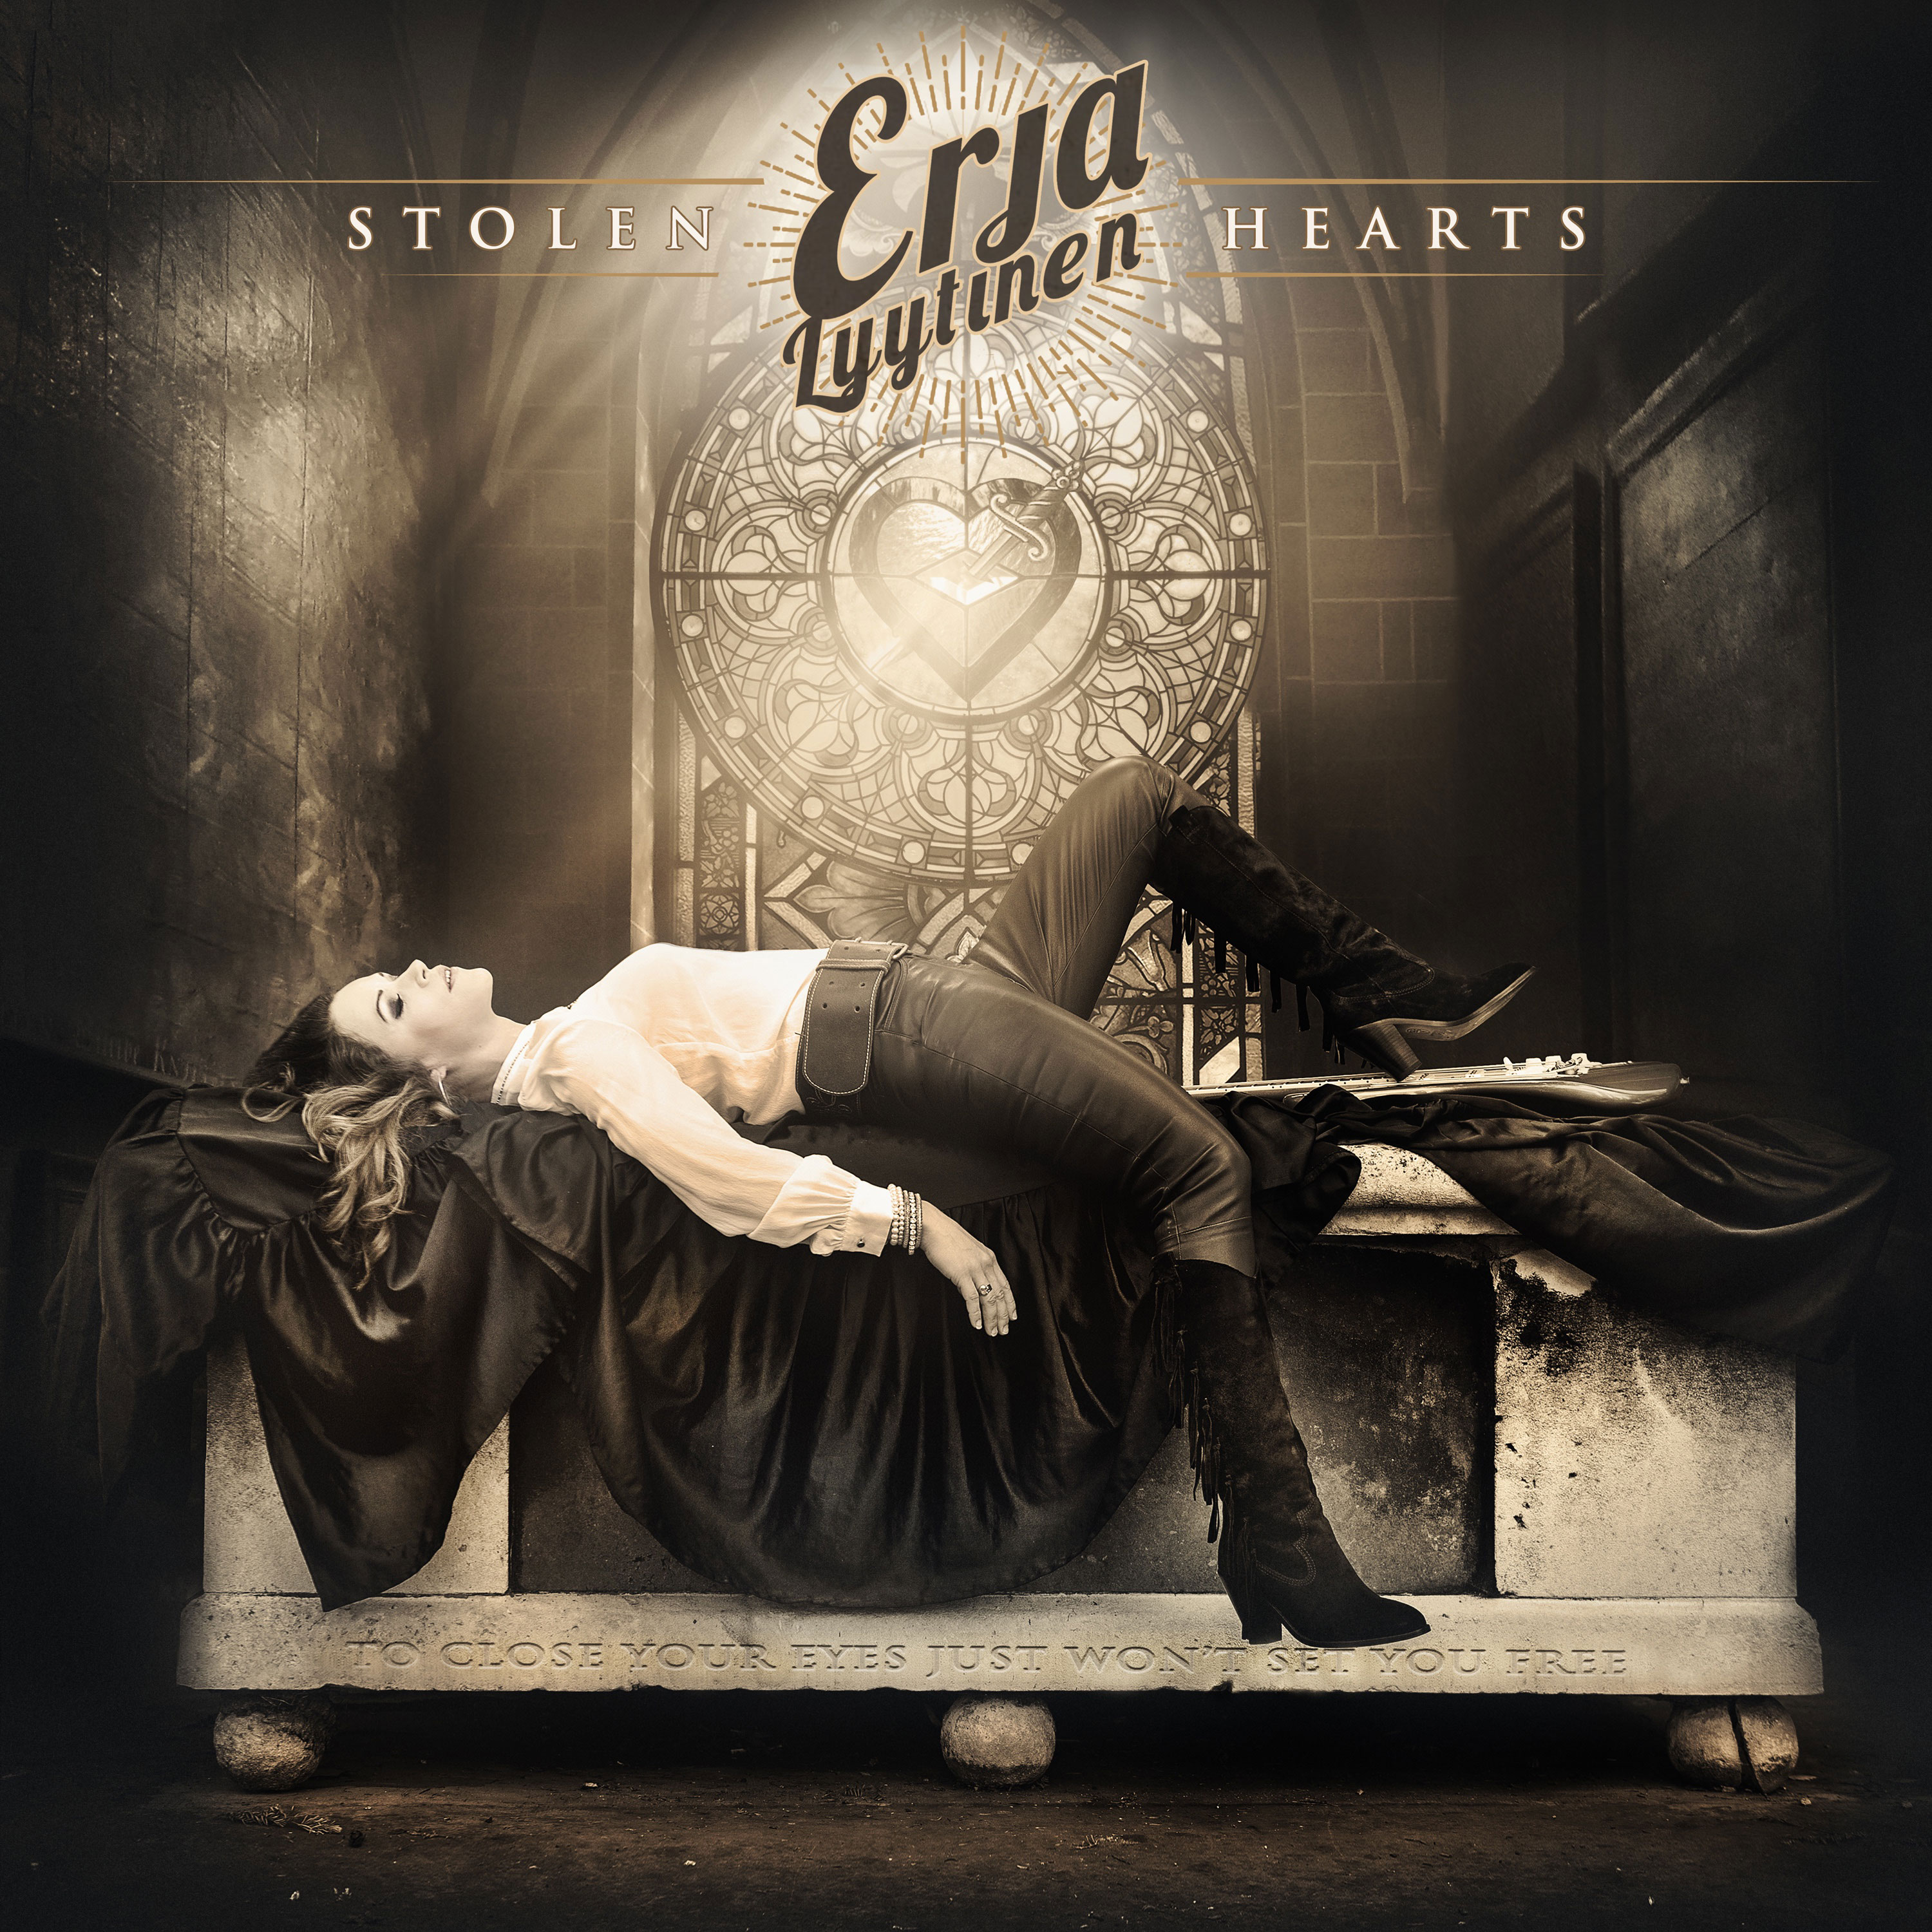 image of album cover for Erj Lyytinen Stolen Hearts